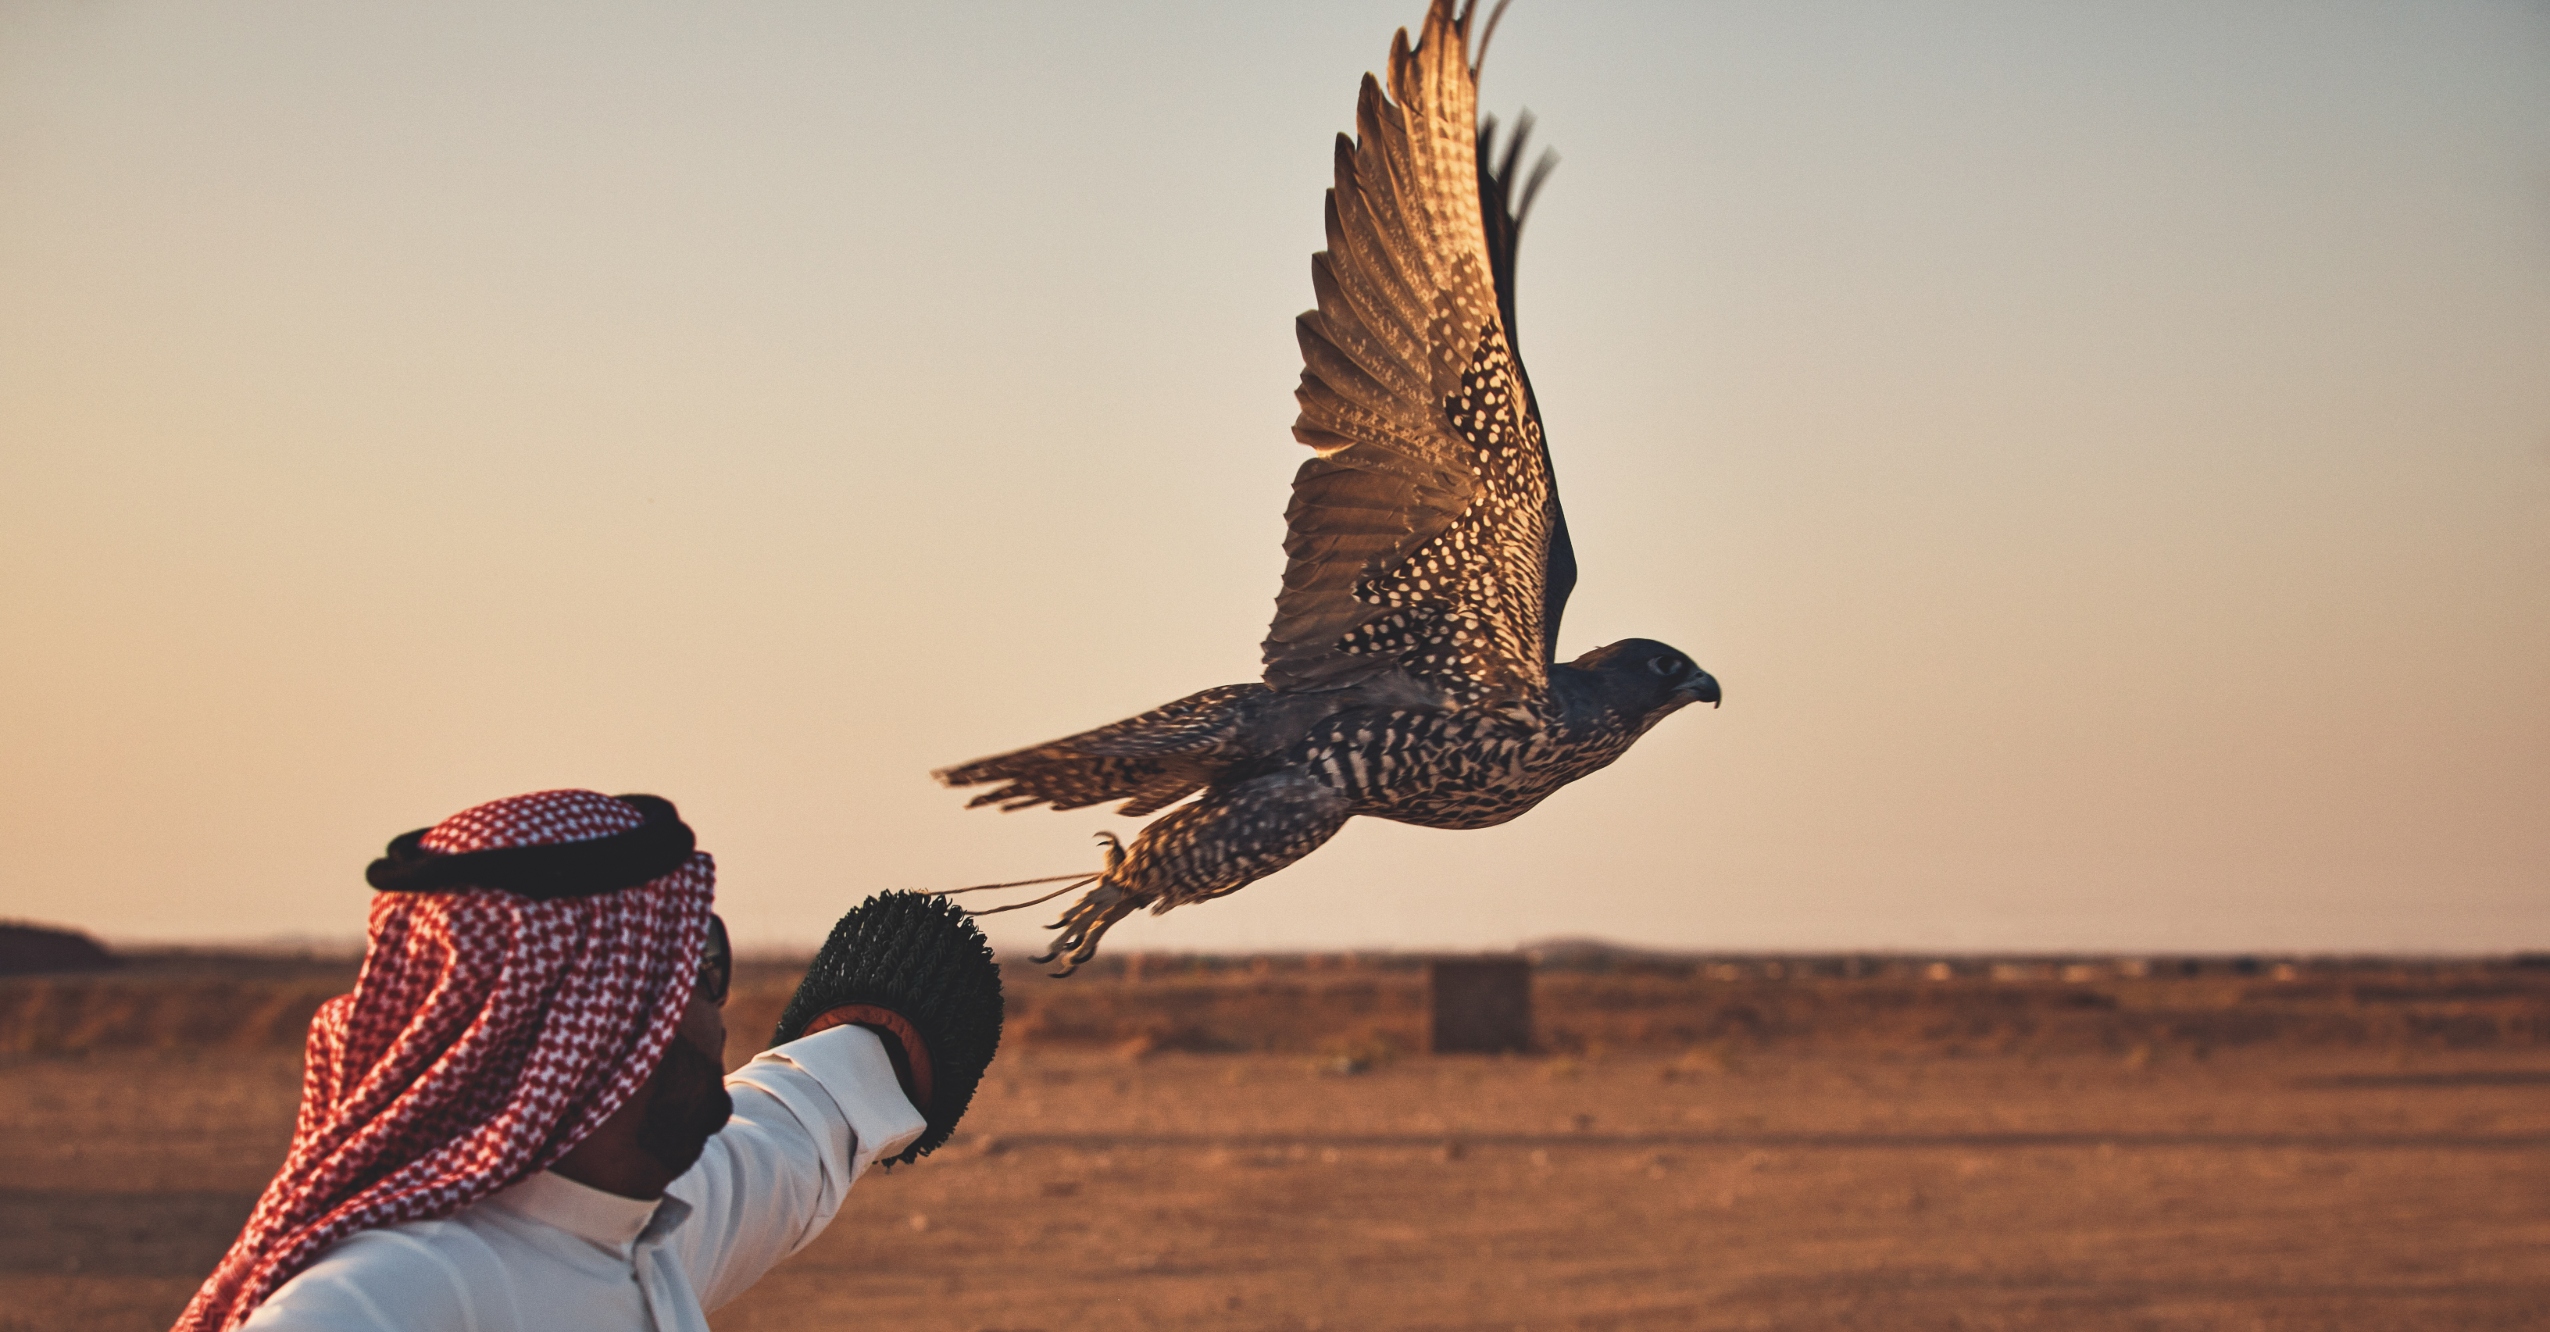 These 3 Animal-Focused Photo Books Spotlight Saudi Arabian Wildlife